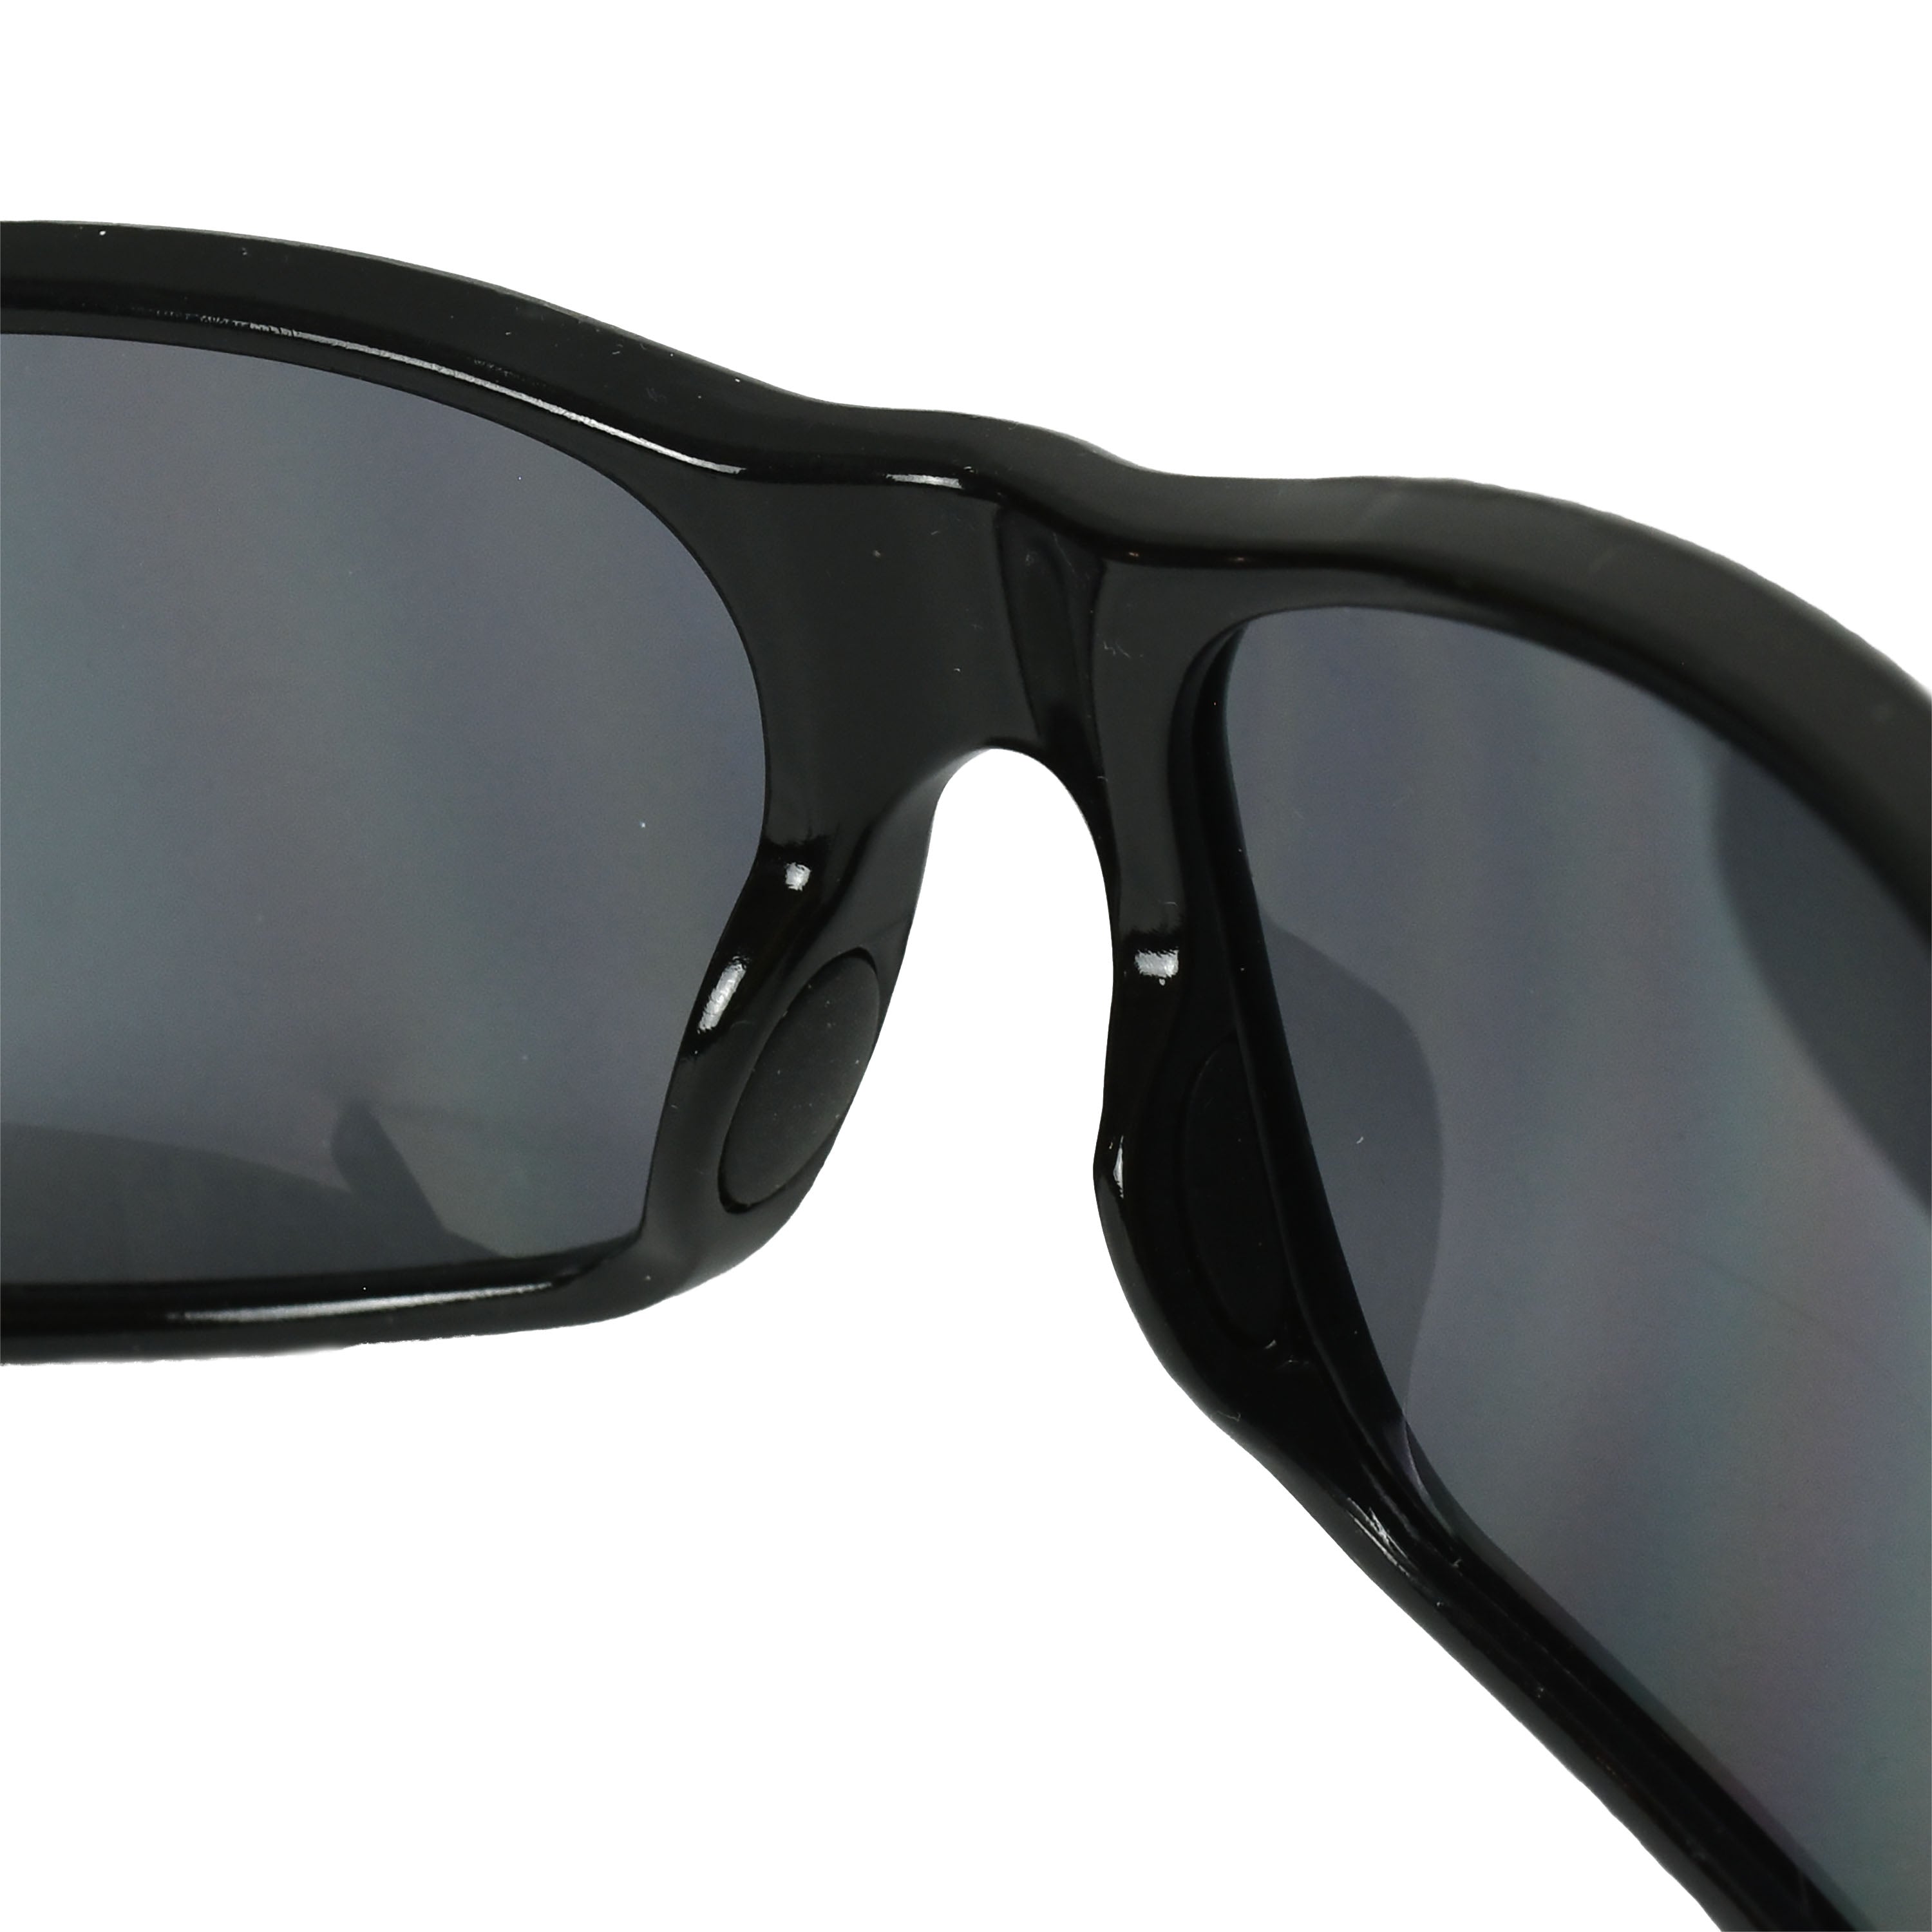 Crossfire CK7 Premium Safety Eyewear (Box of 12)